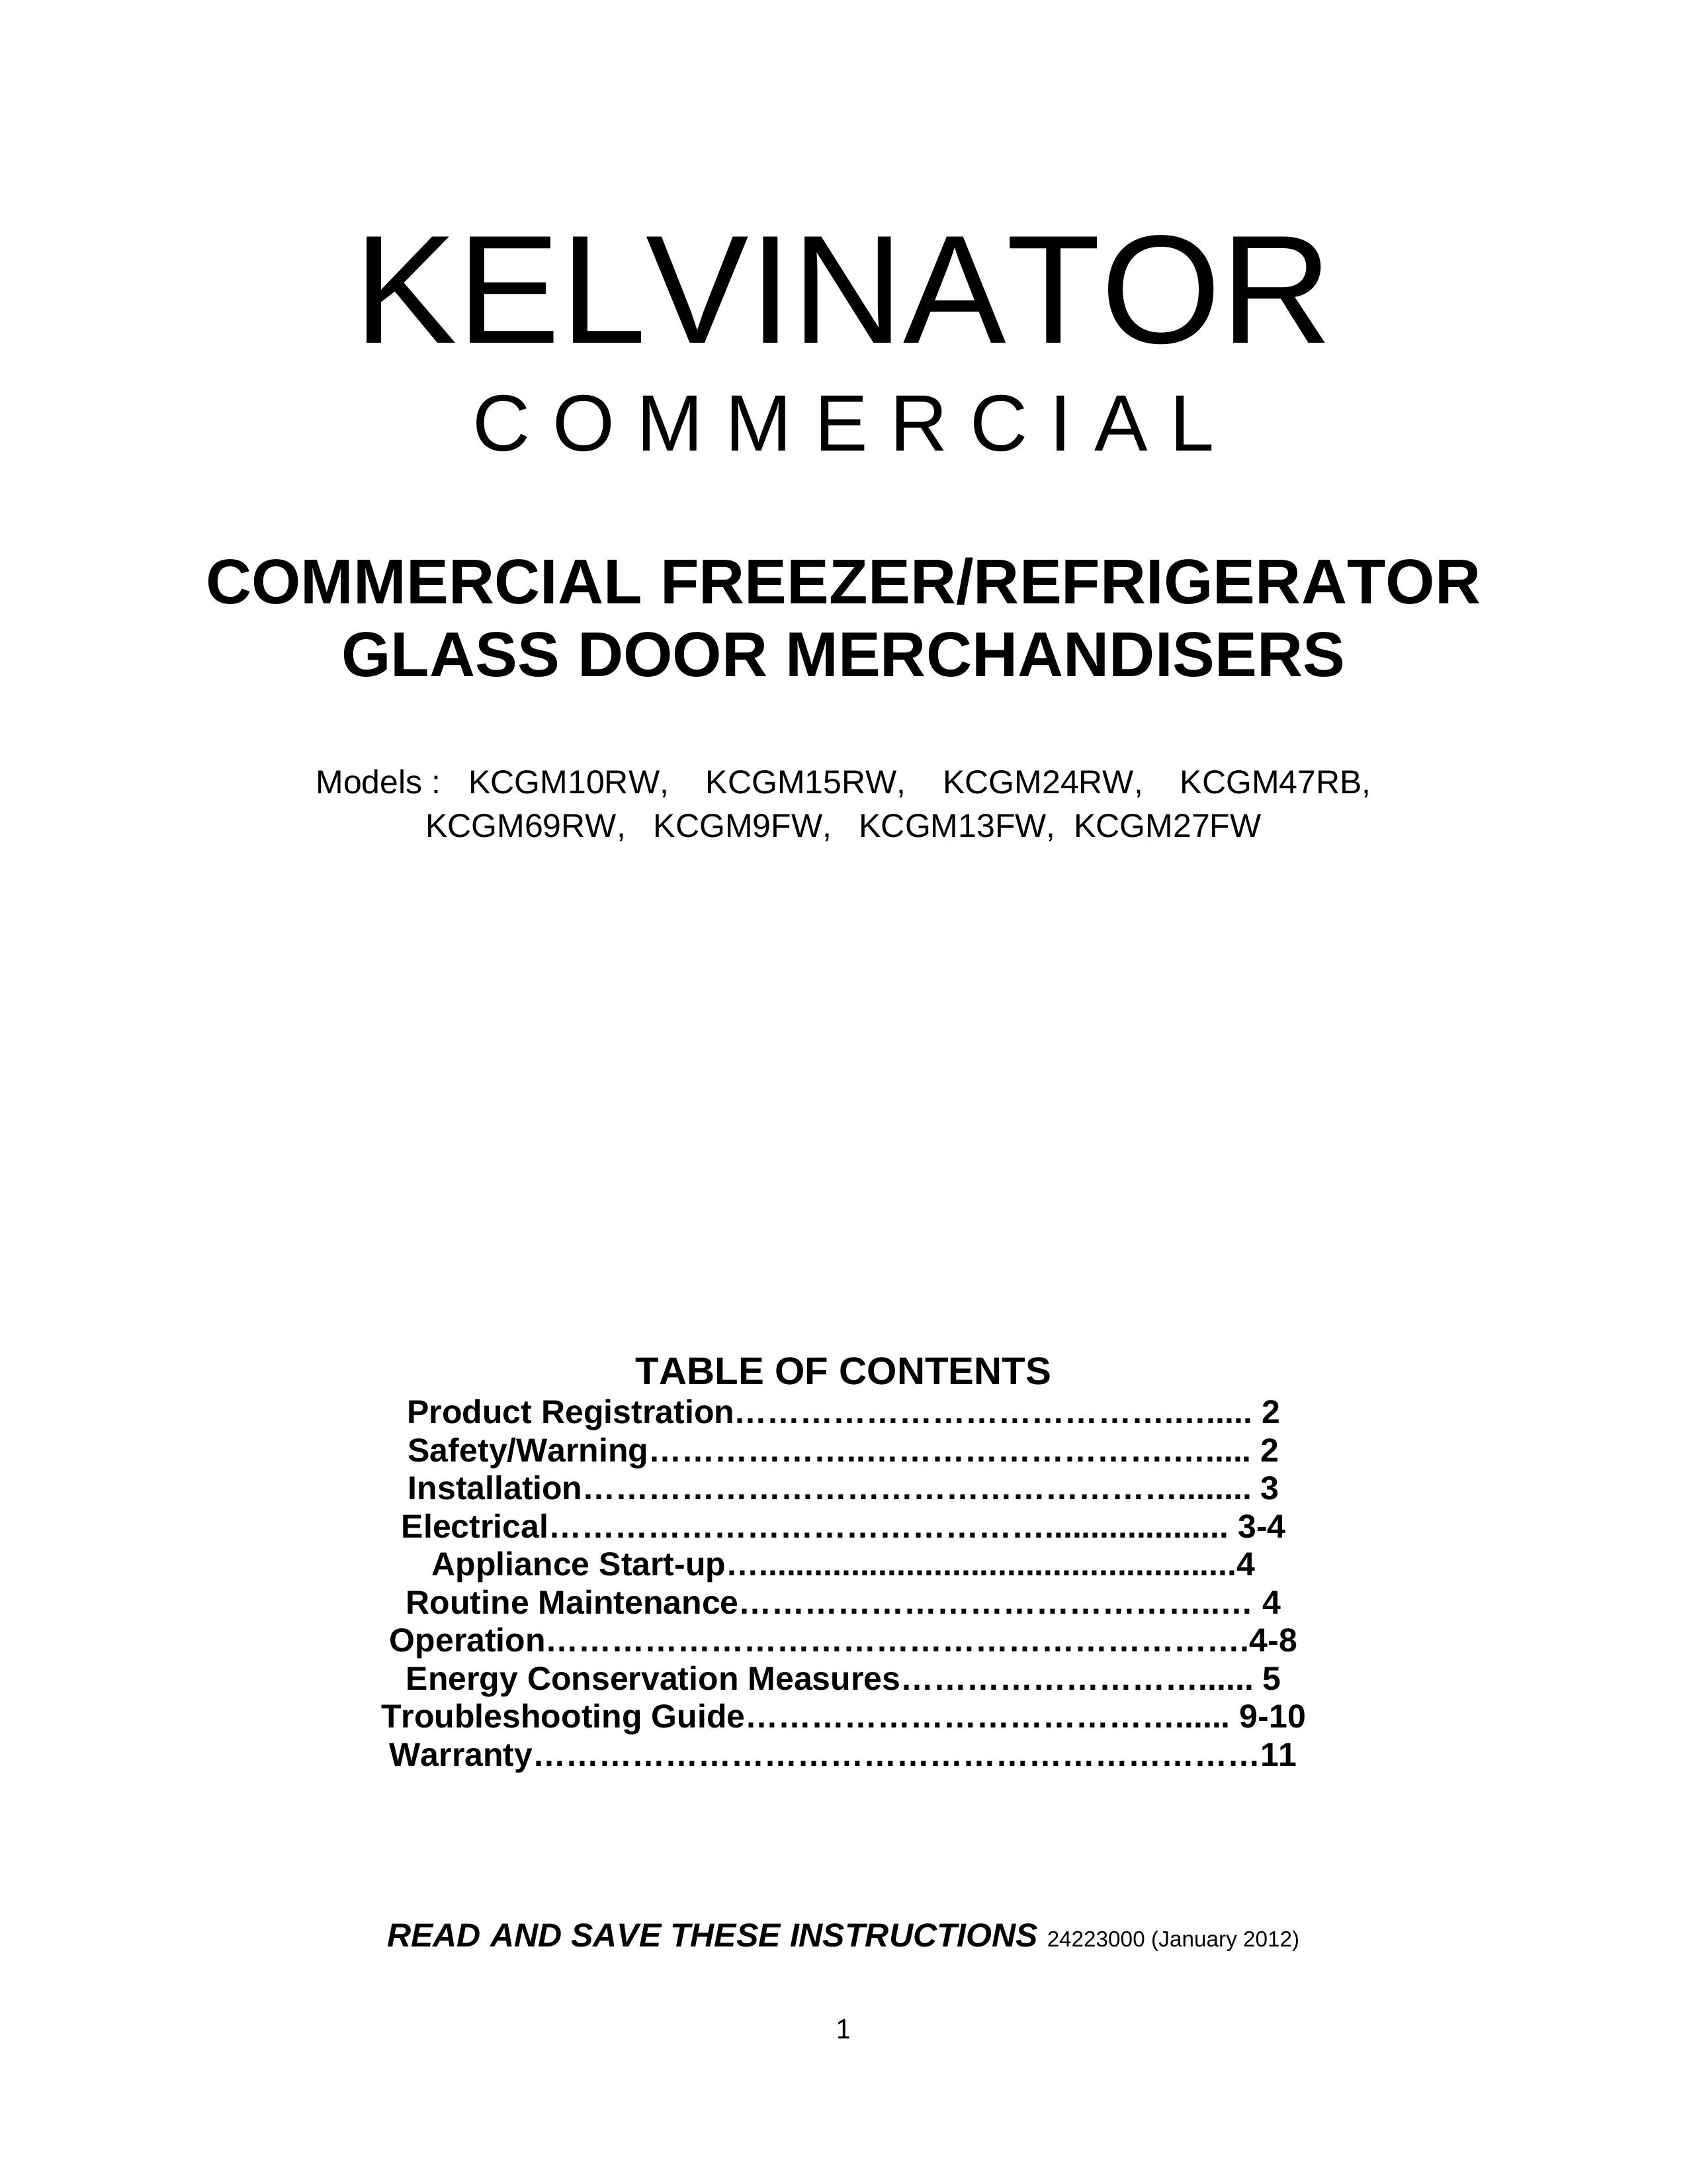 Kelvinator KCGM24RW Refrigerator User Manual